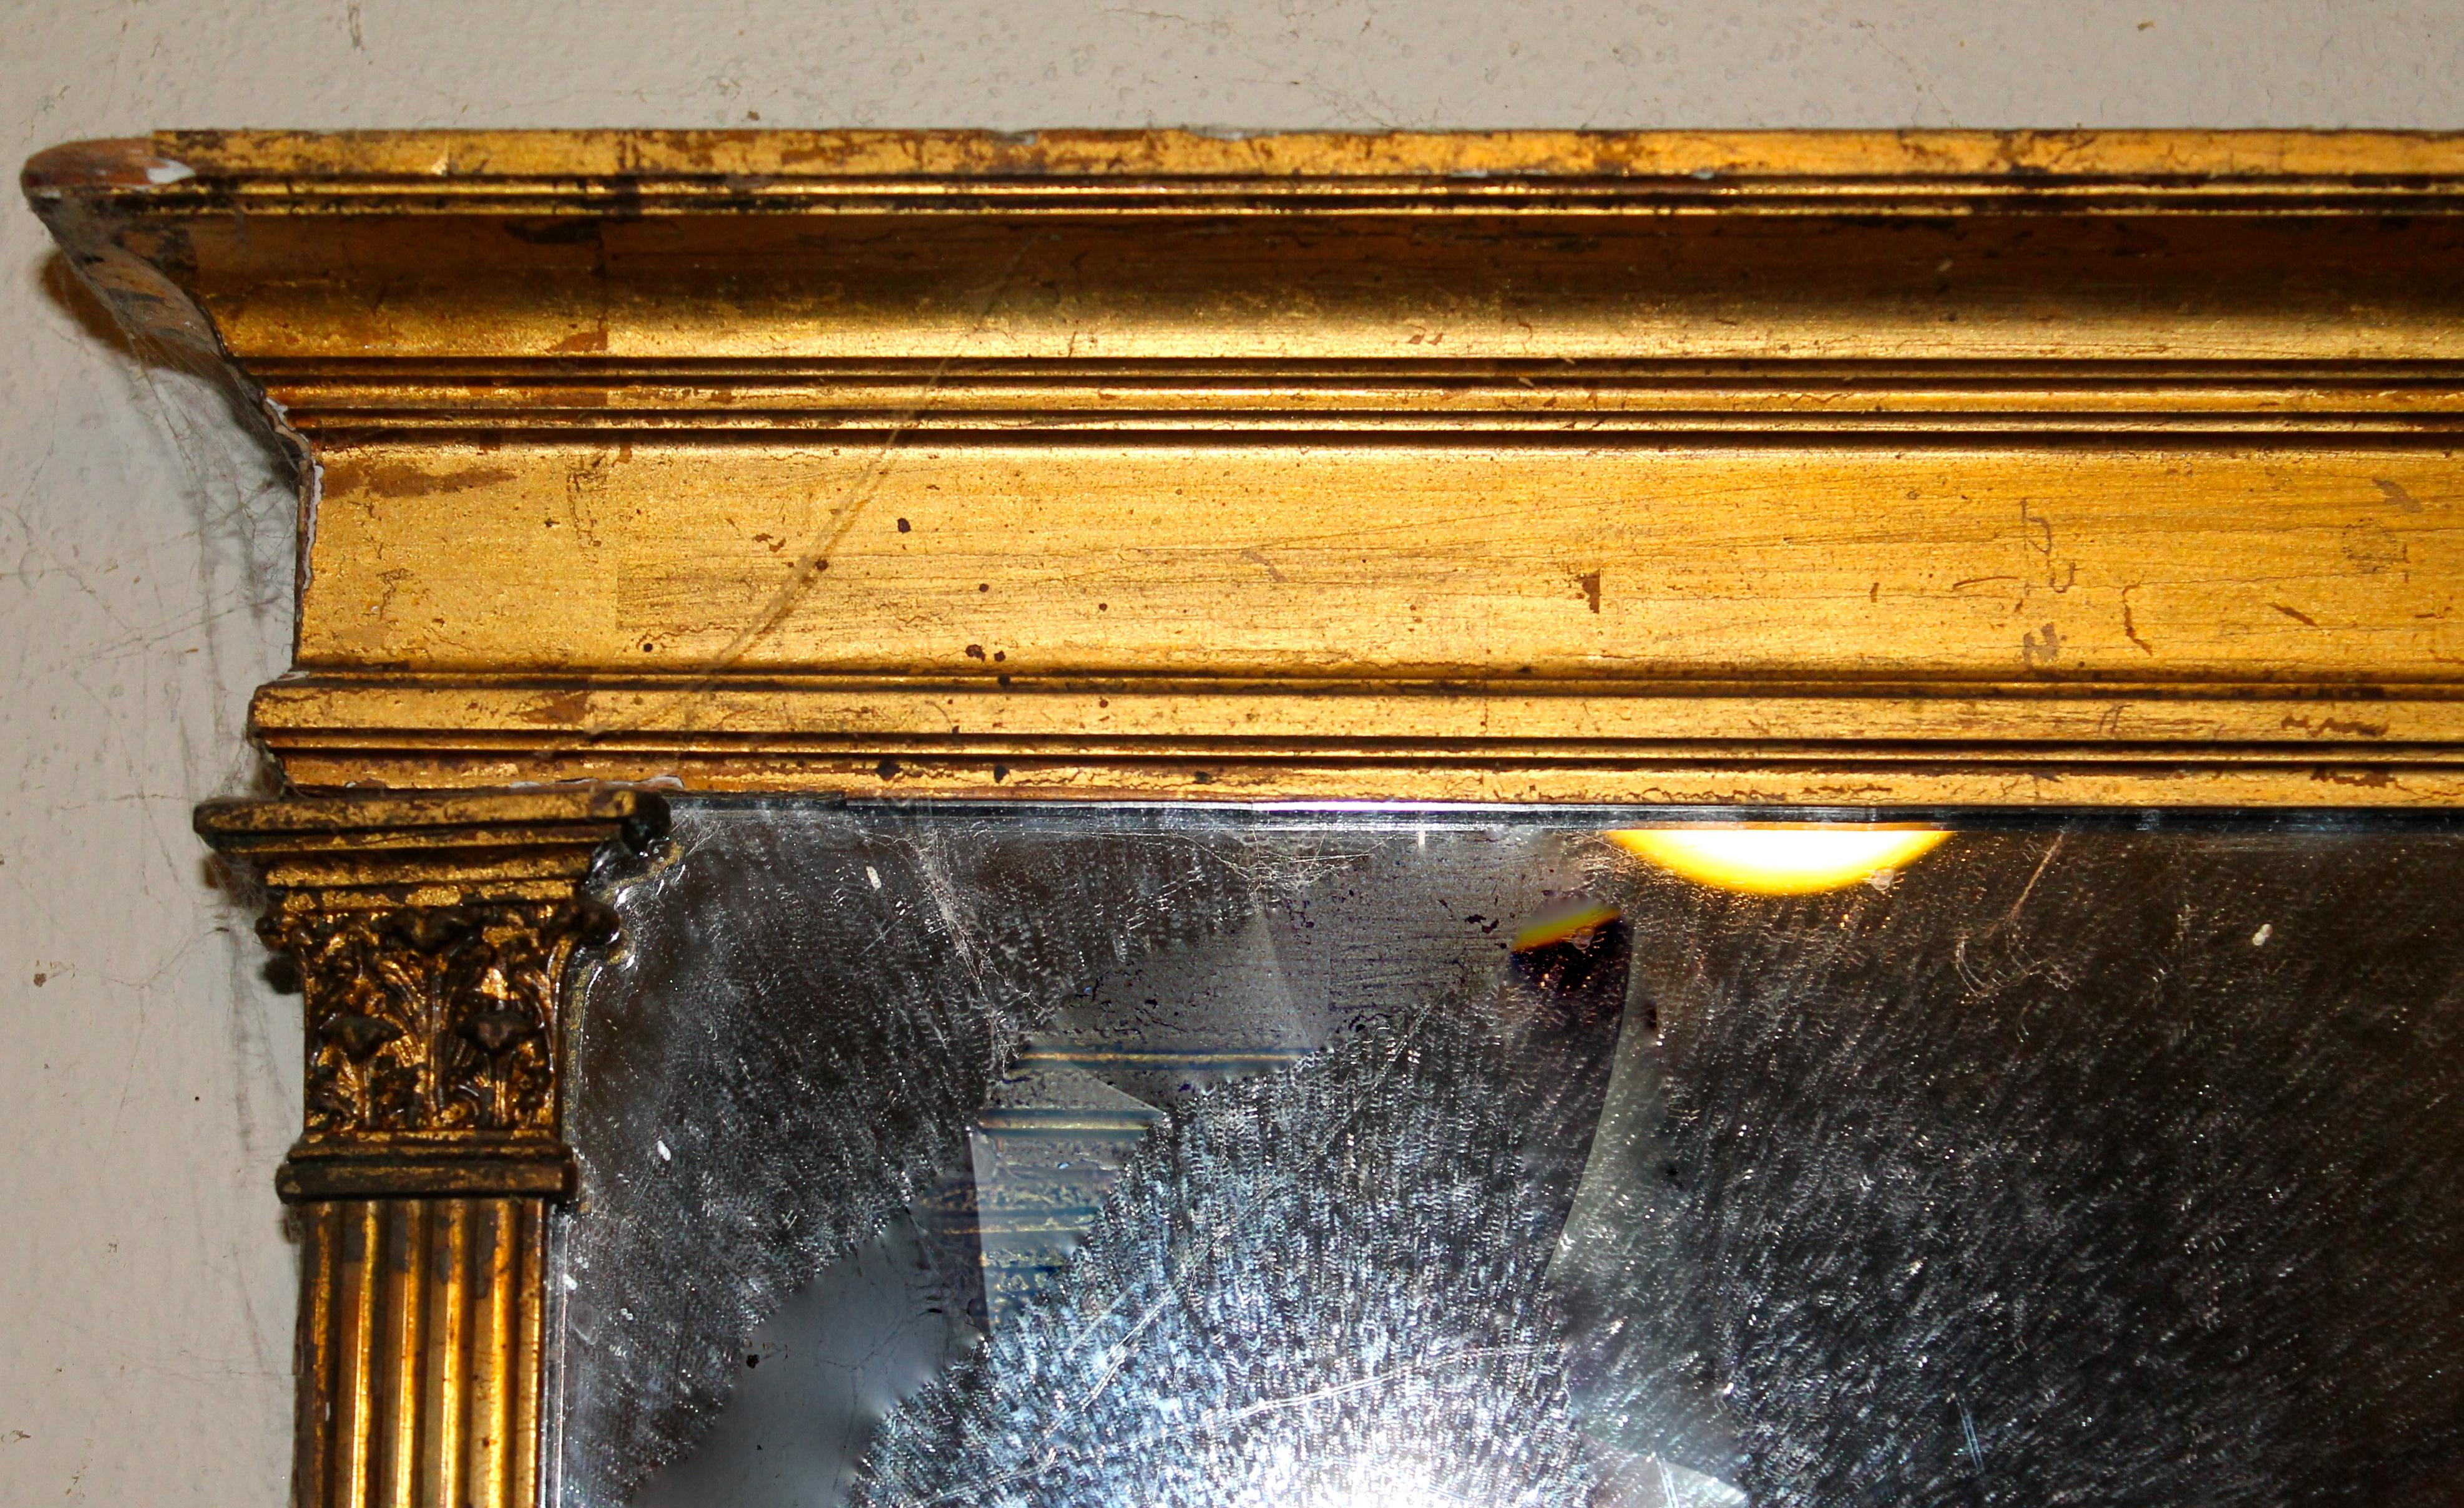 Period American Renaissance gold gilt on cast elements on wood frame/mirror.
Rabbit (mirror)size: 24